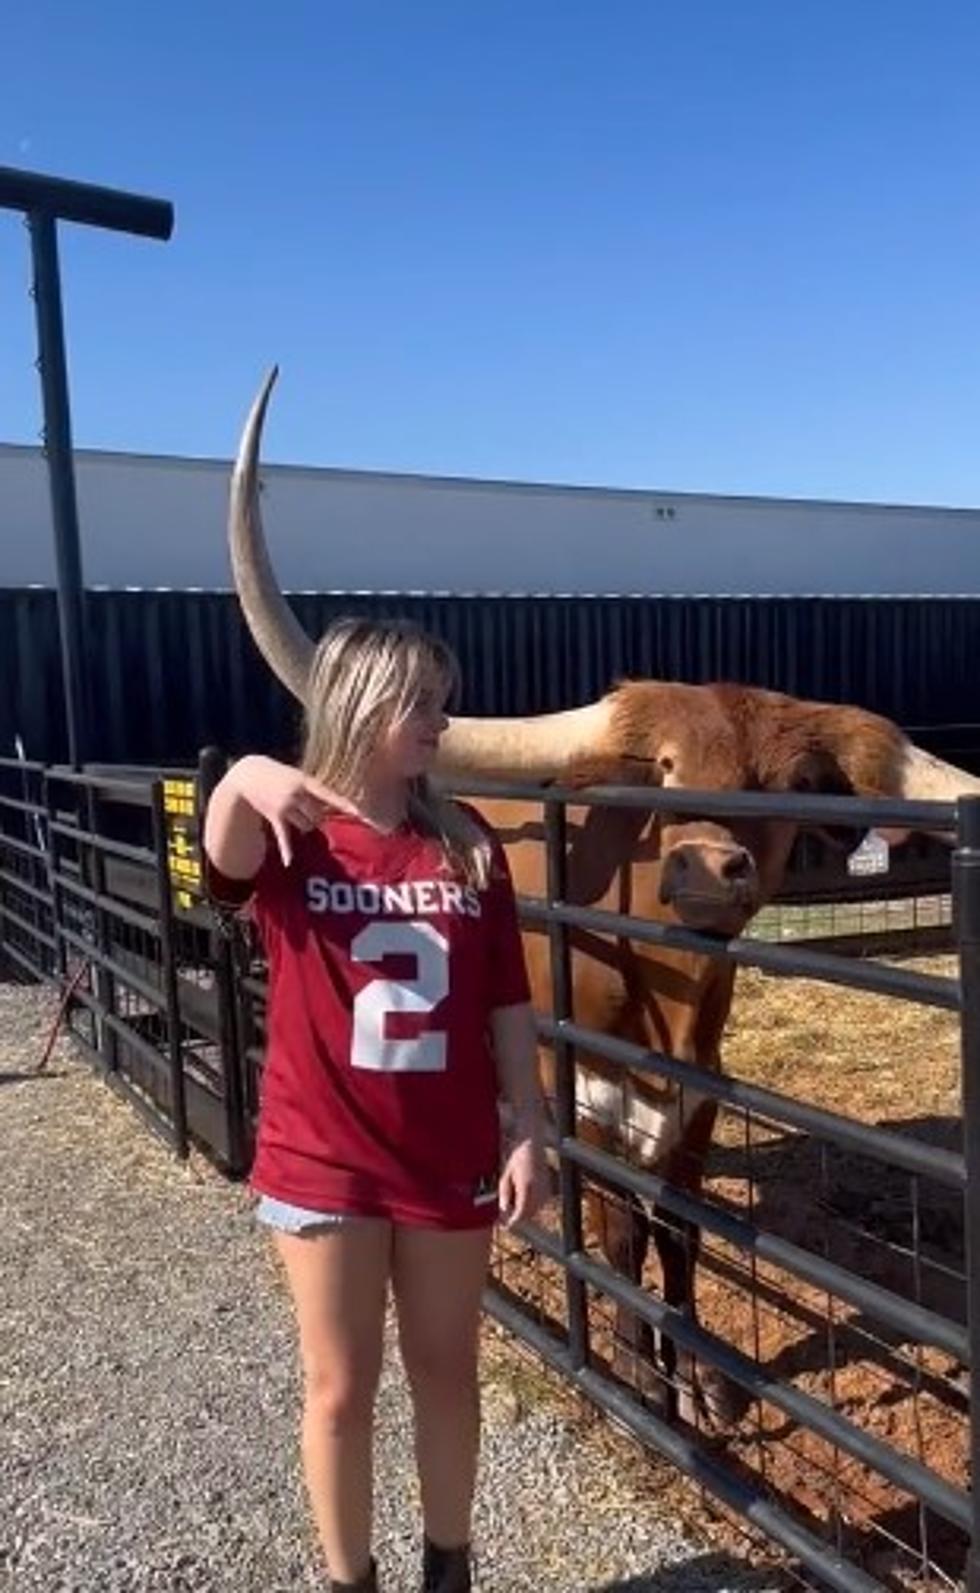 Oklahoma Moron Gets INSTANT Karma from Texas Longhorn [VIDEO]